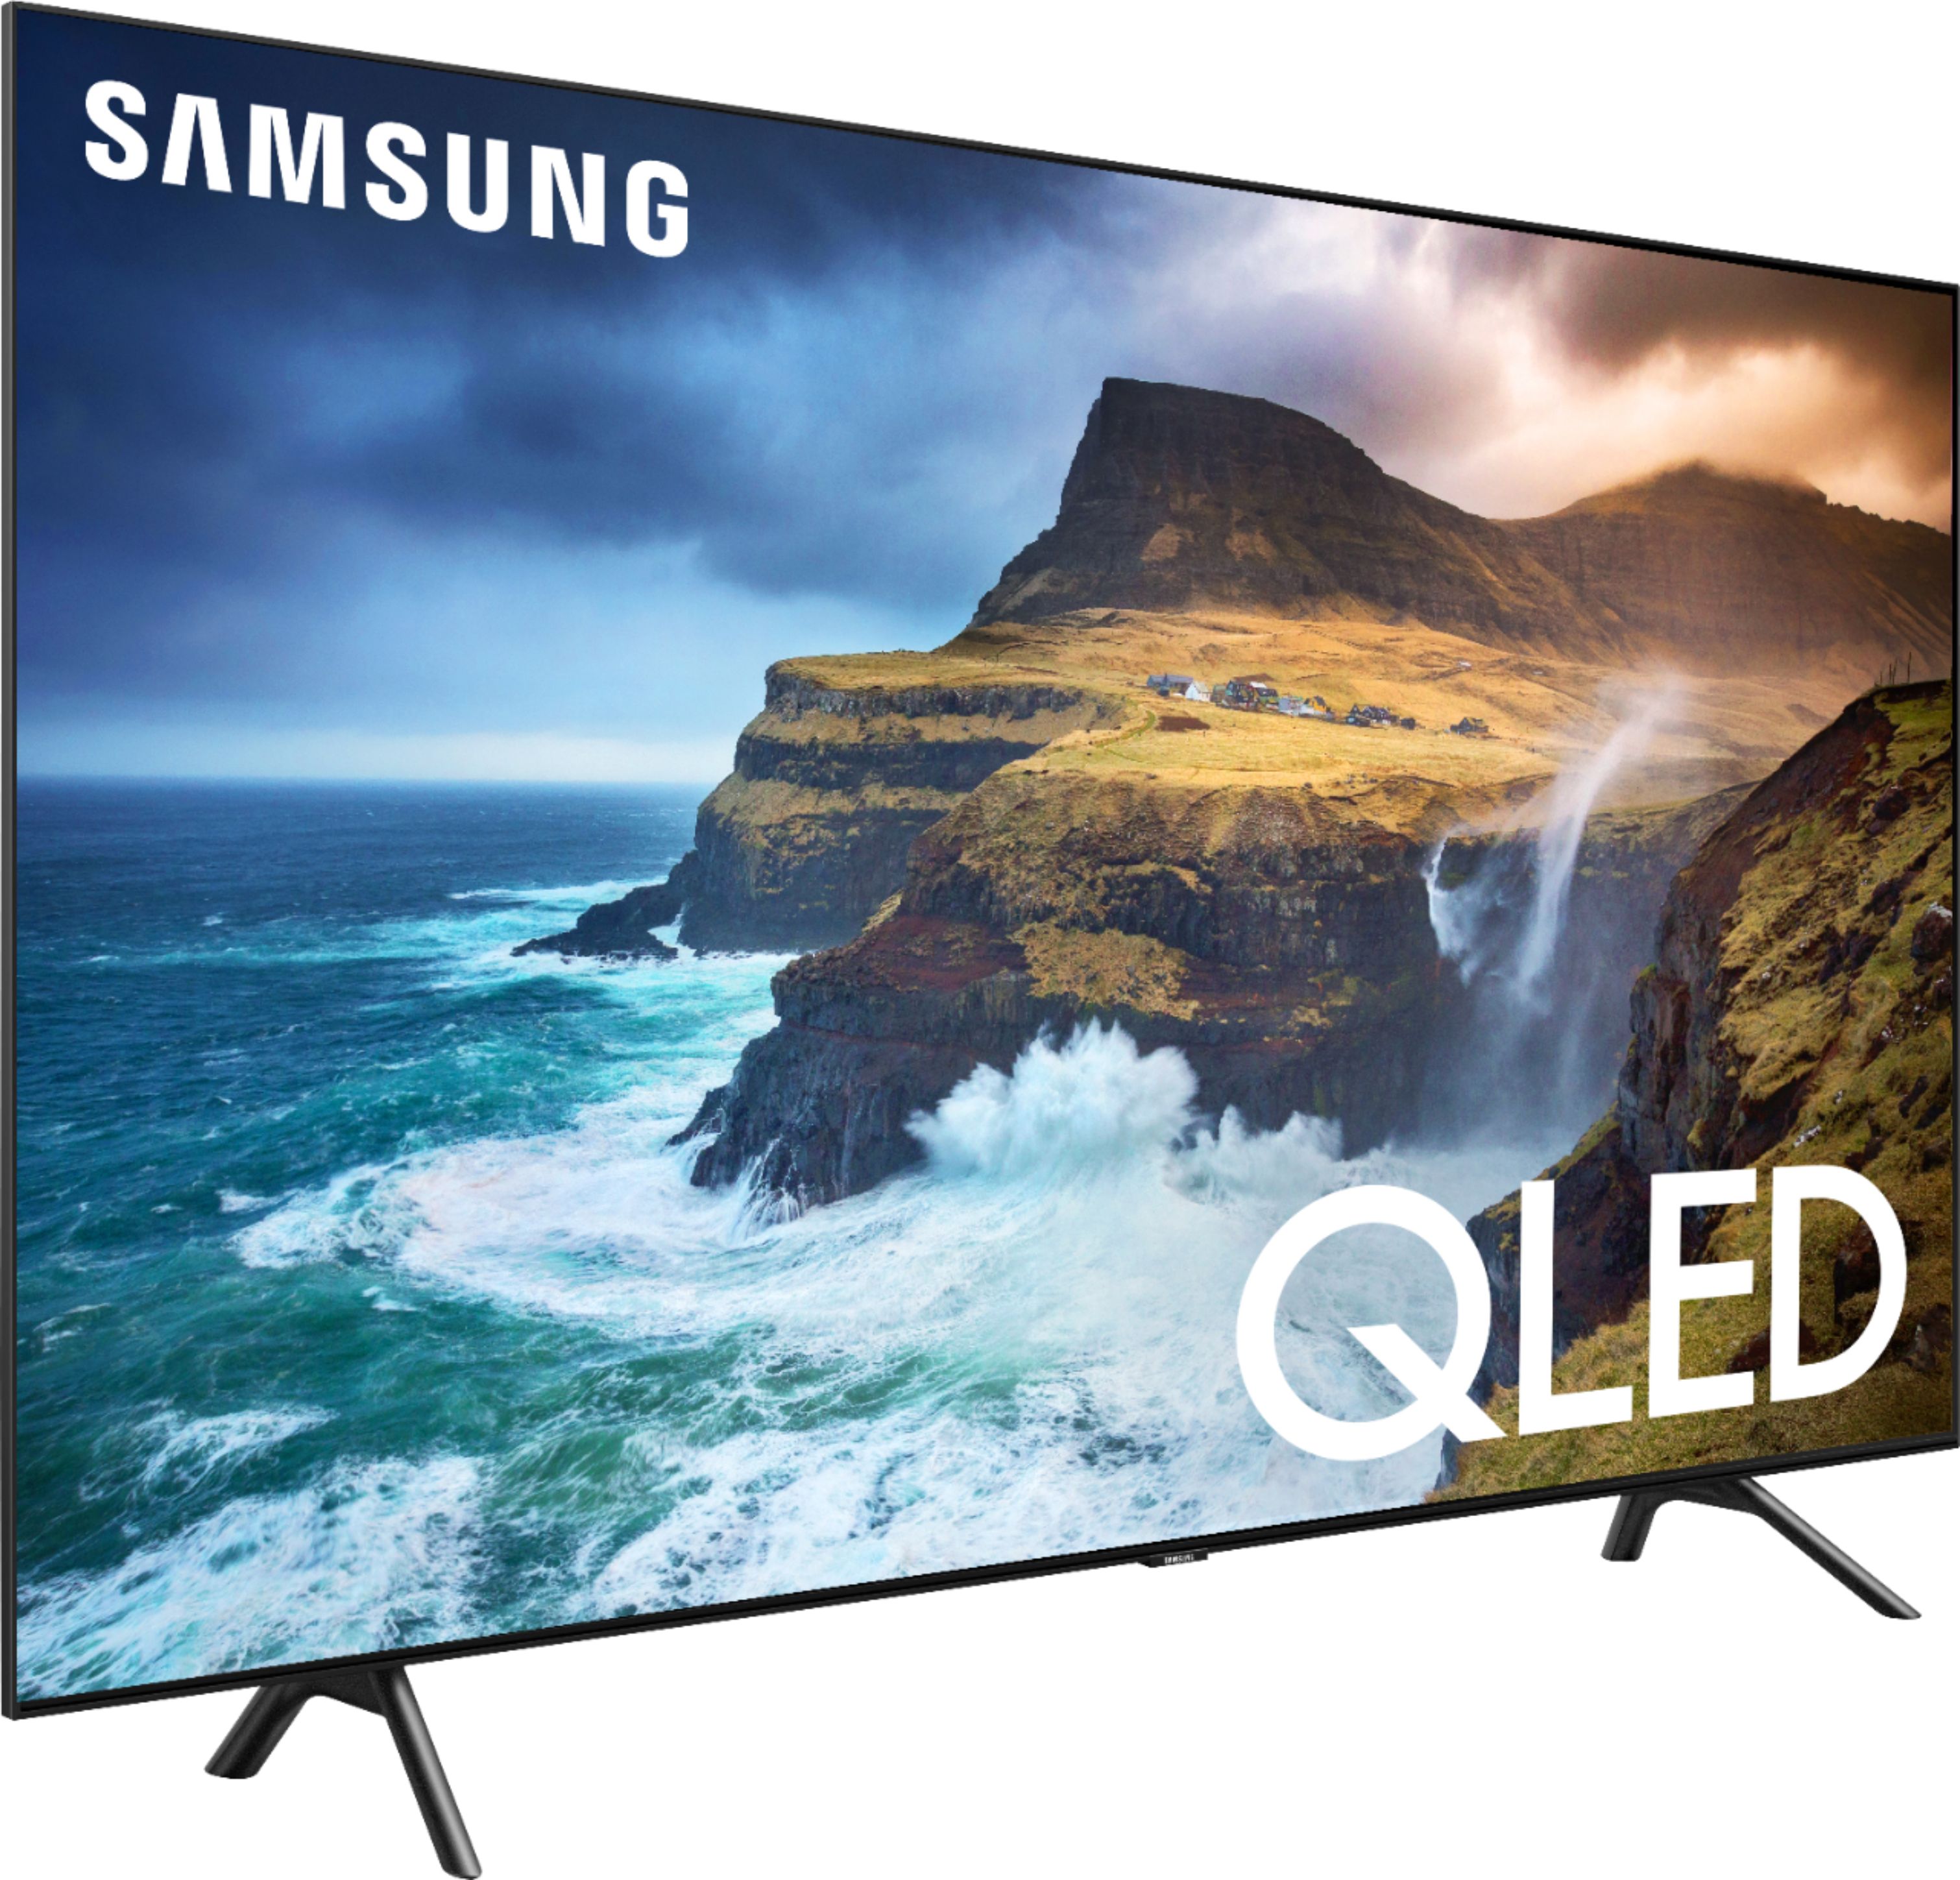 Samsung 55 Class LED Curved Q8C Series 2160p Smart 4K UHD TV with HDR  QN55Q8CAMFXZA - Best Buy